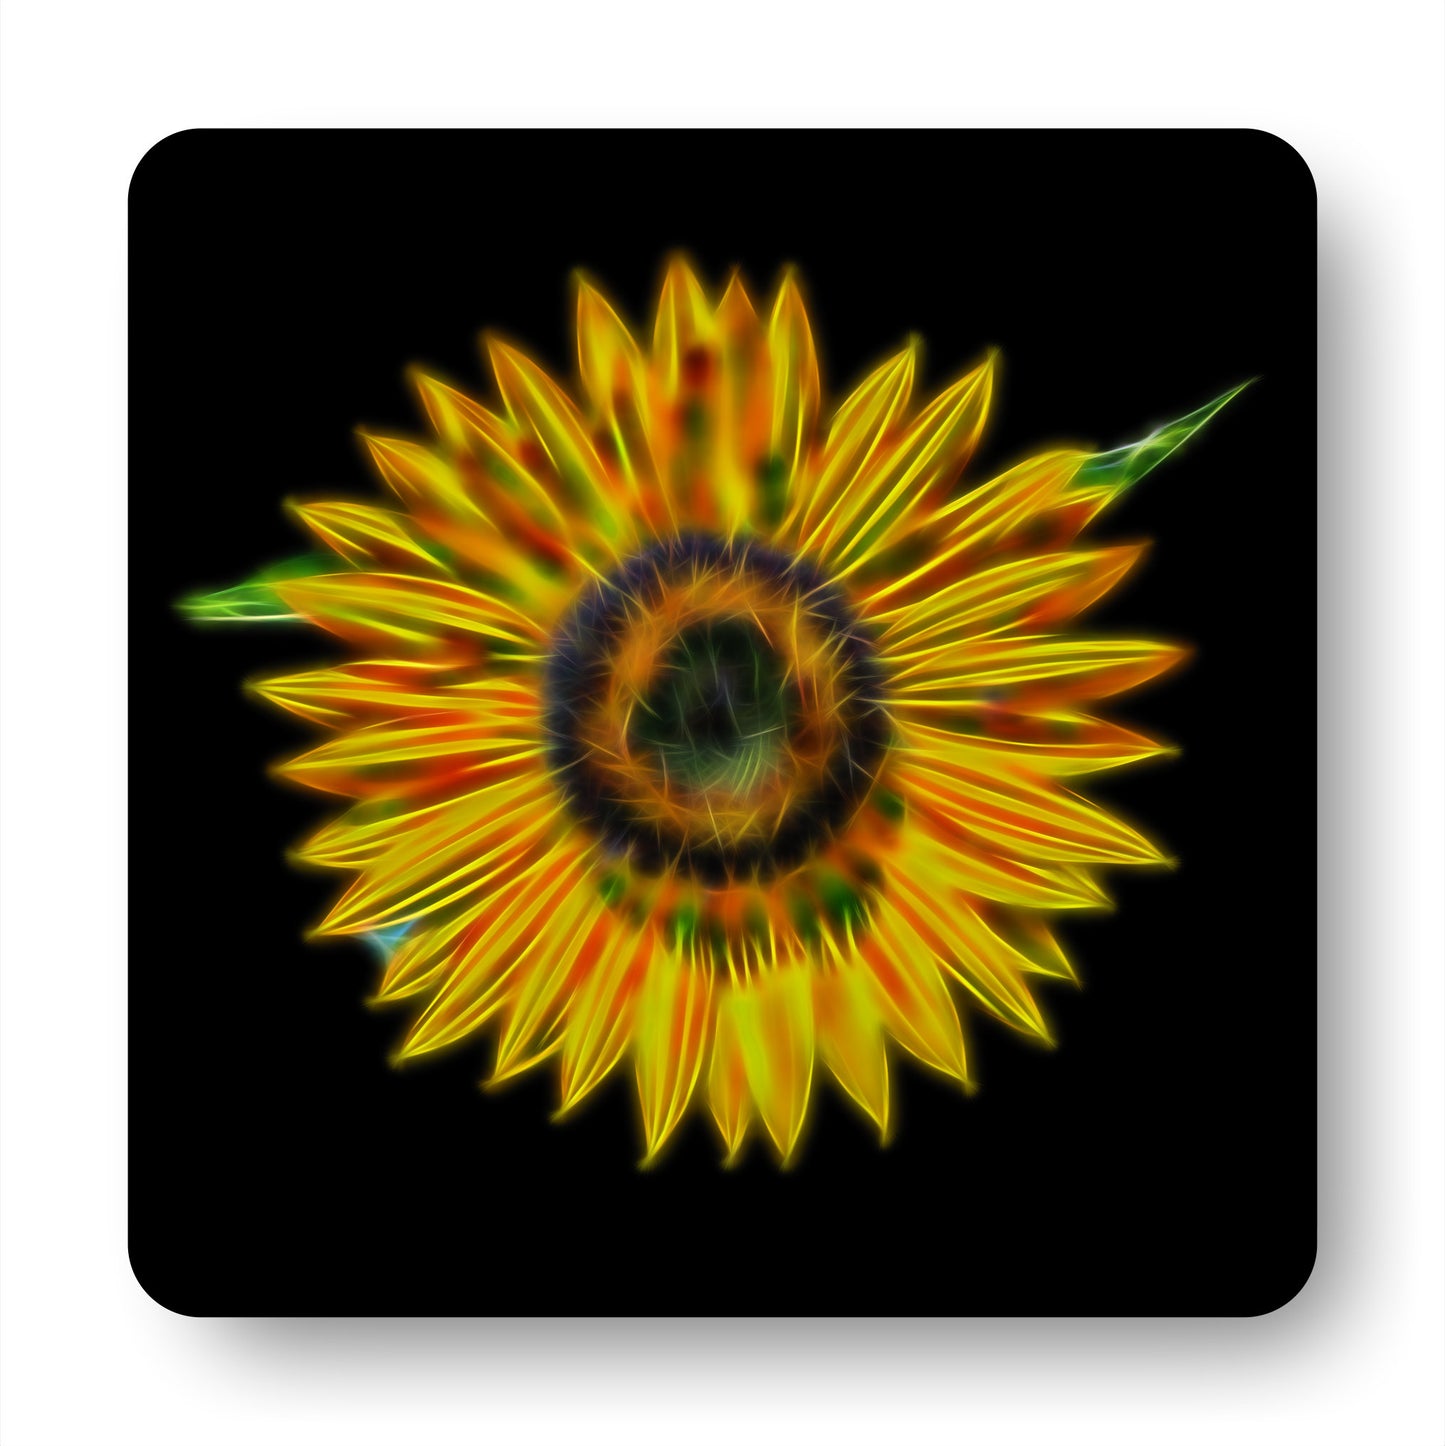 Sunflower Coasters with Stunning Fractal Art Design.